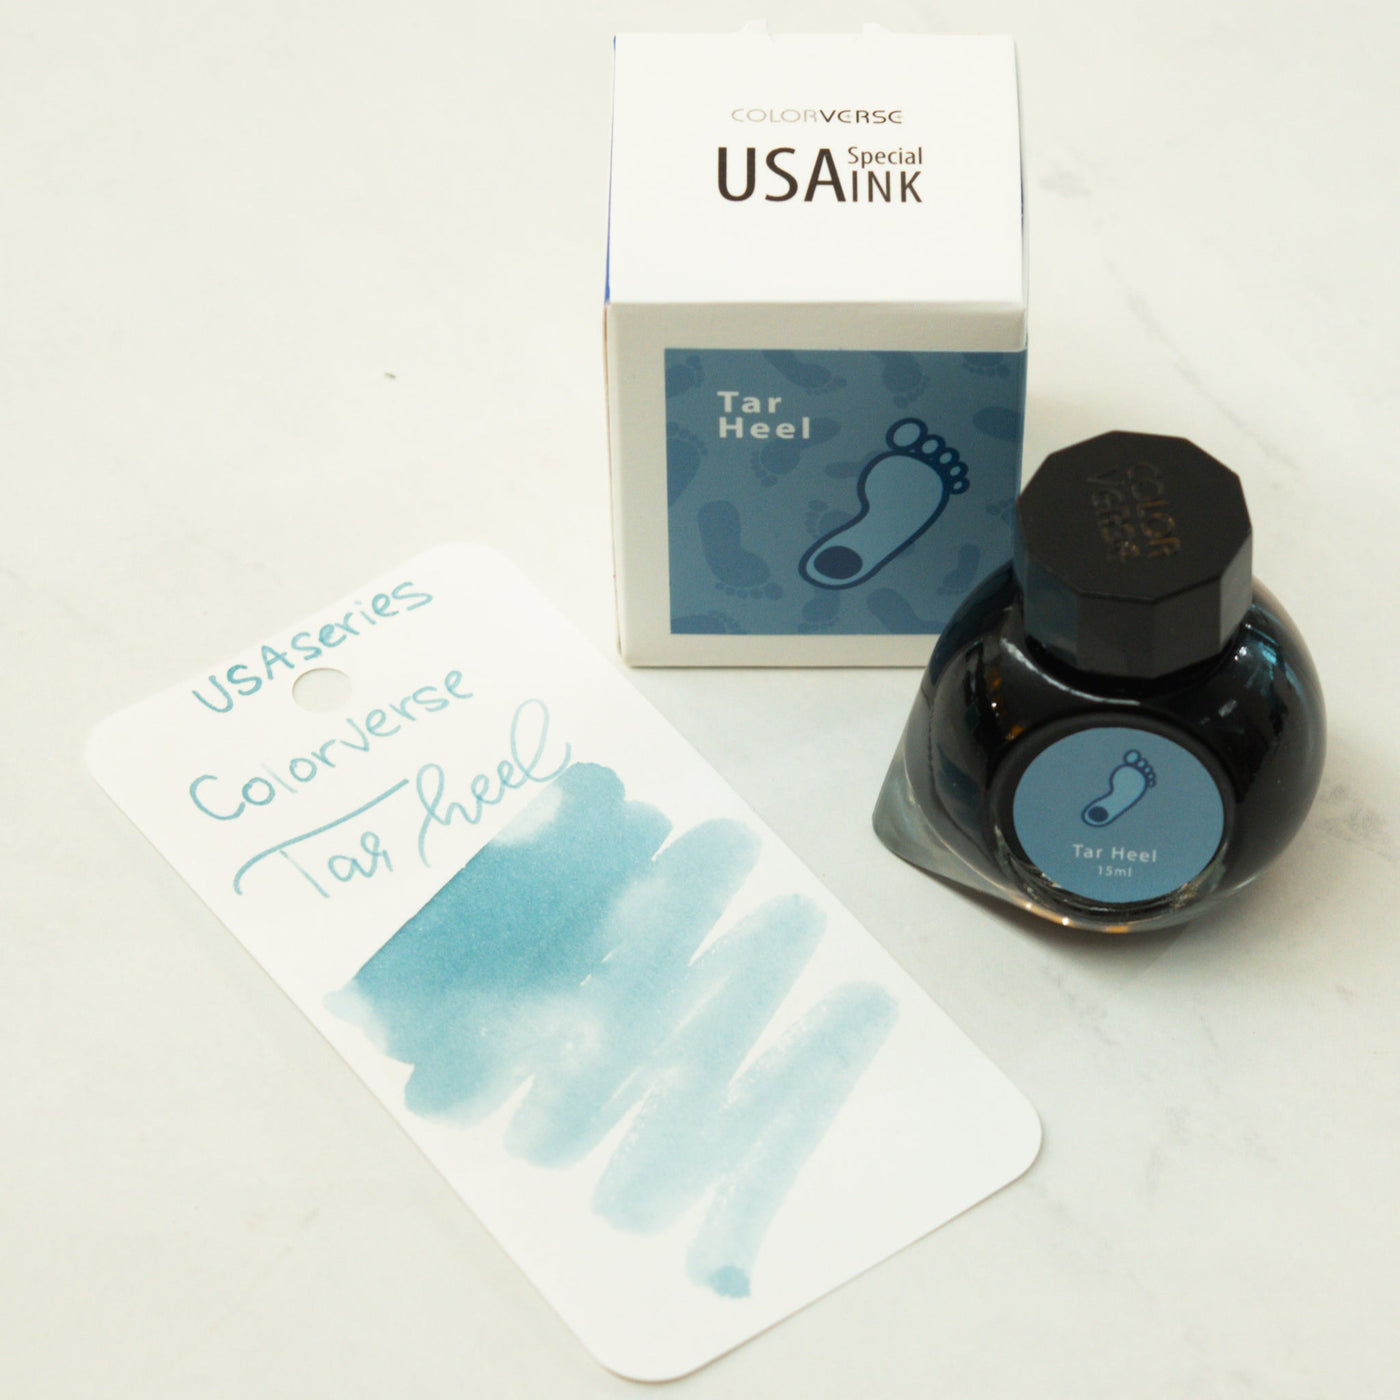 Colorverse USA Special Series North Carolina Tar Heel Blue Ink